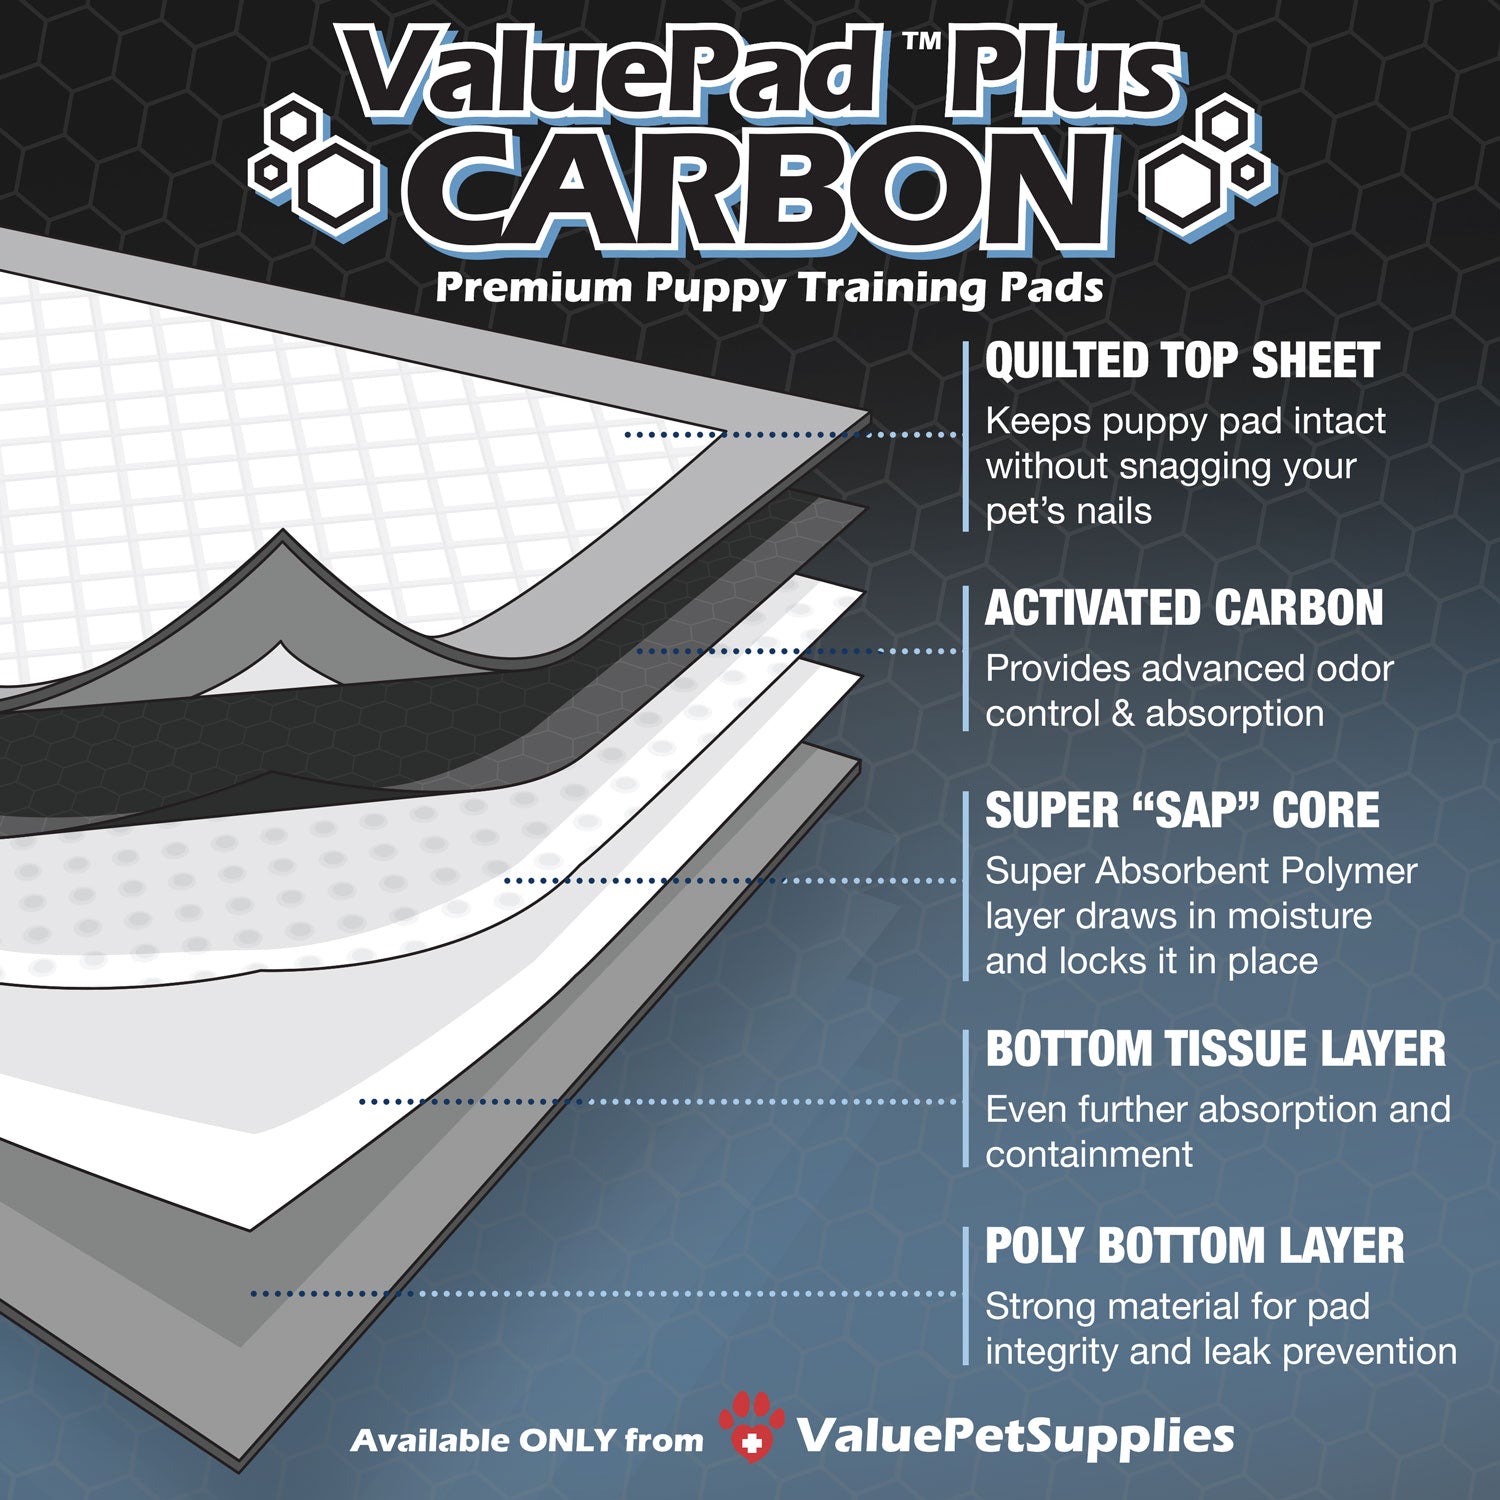 ValuePad Plus Carbon Puppy Pads, X-Large 28x36 Inch, 400 Count WHOLESALE PACK